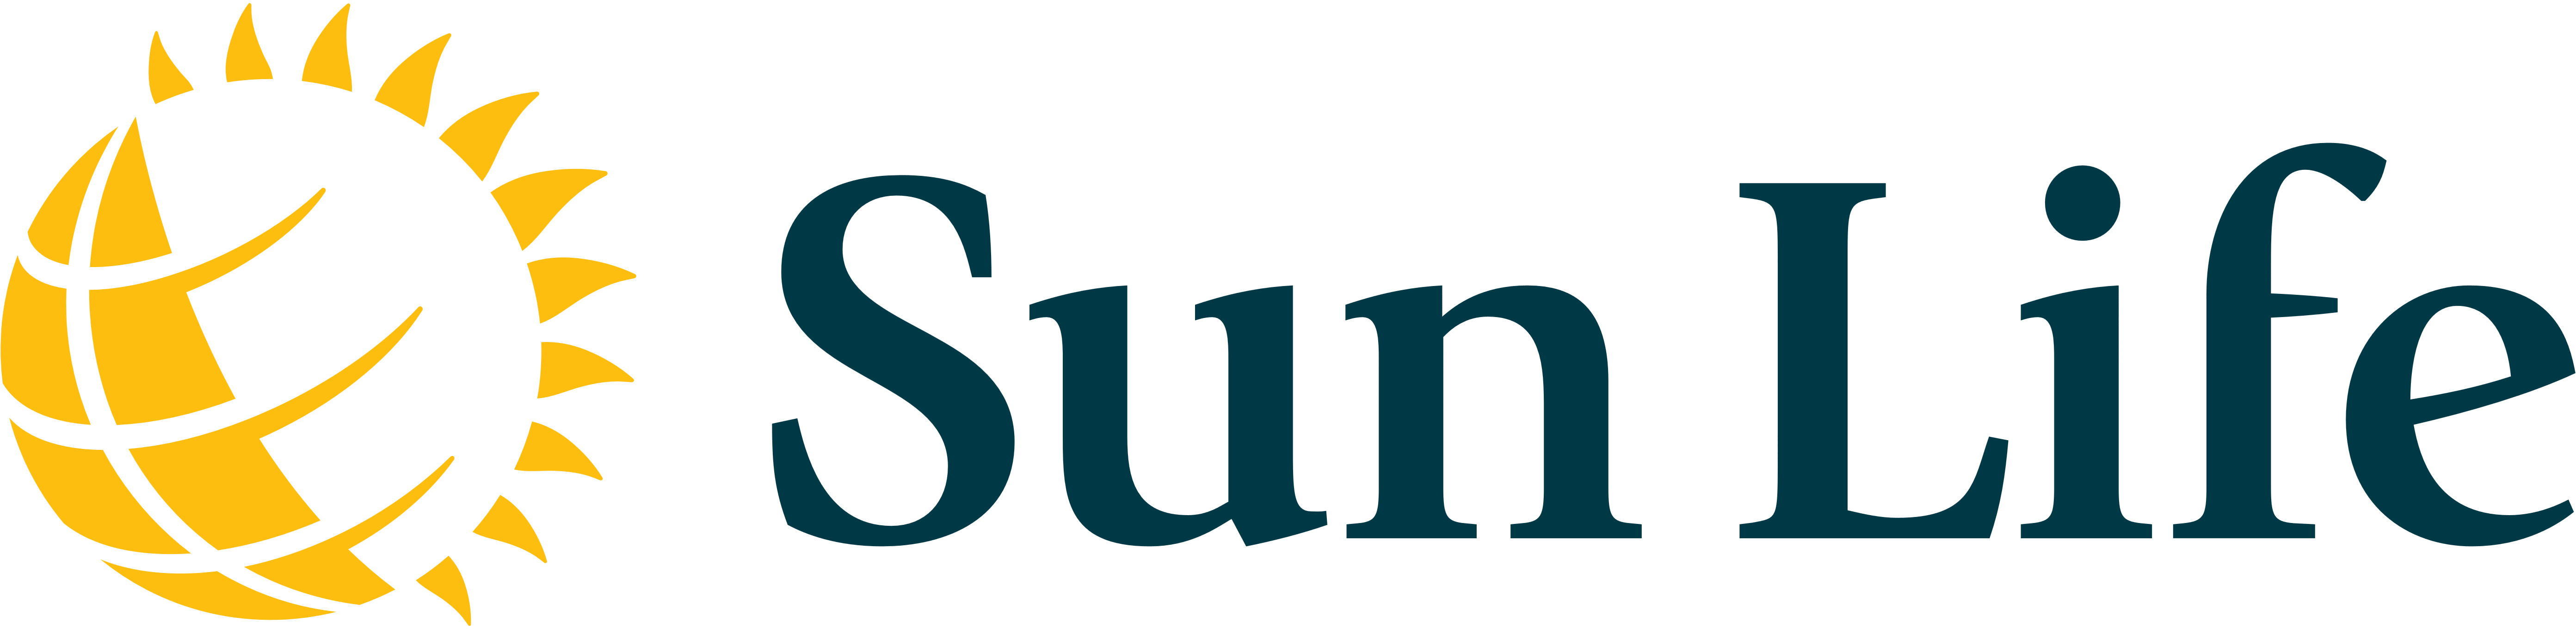 Sun is life. Sun Life. Sun логотип. Санлайф логотип. Sun Life logo svg.